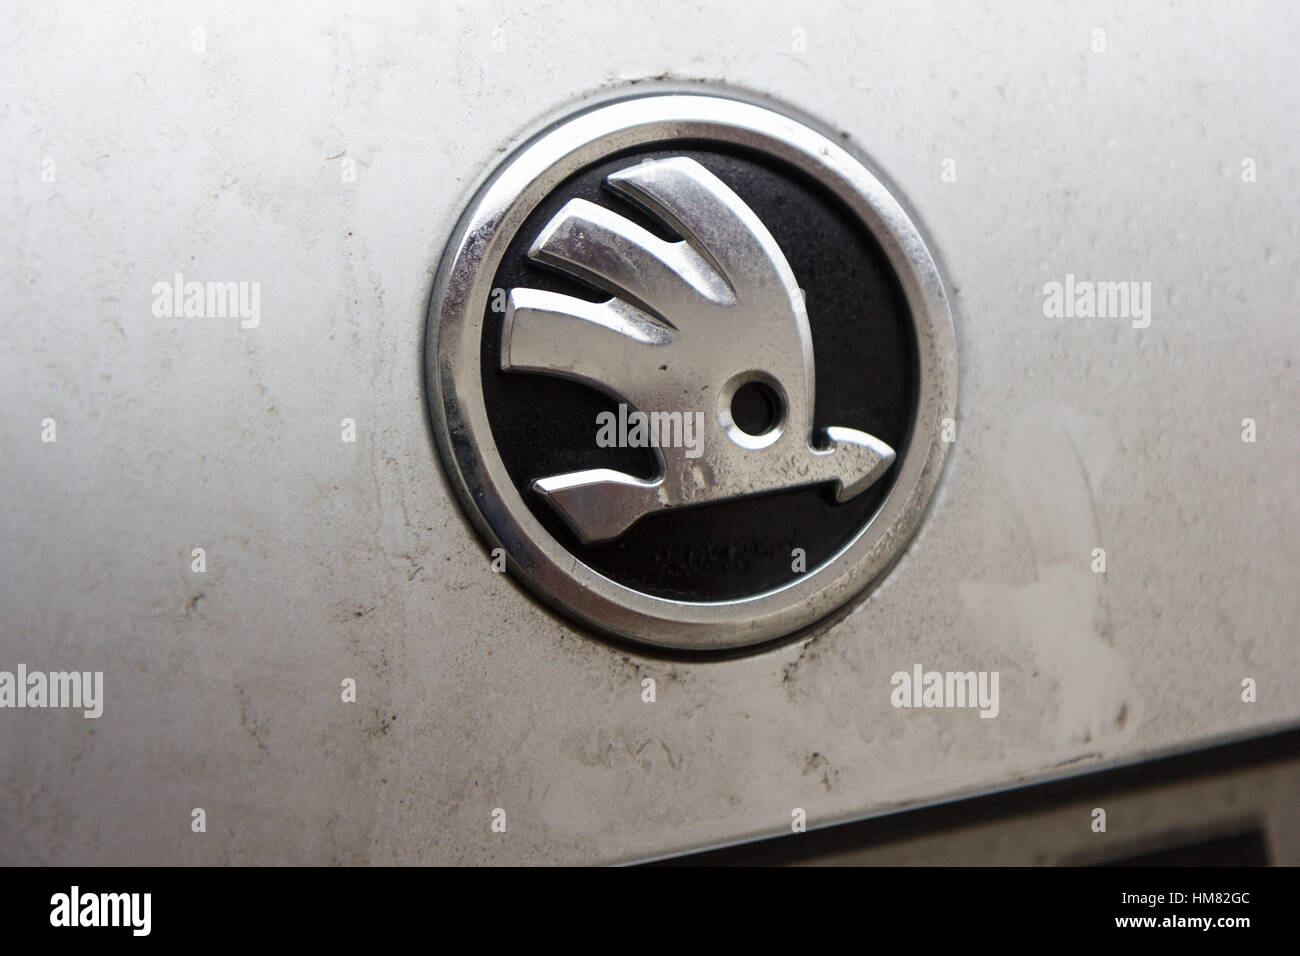 The logo of Skoda brand on a Skoda Octavia car Stock Photo